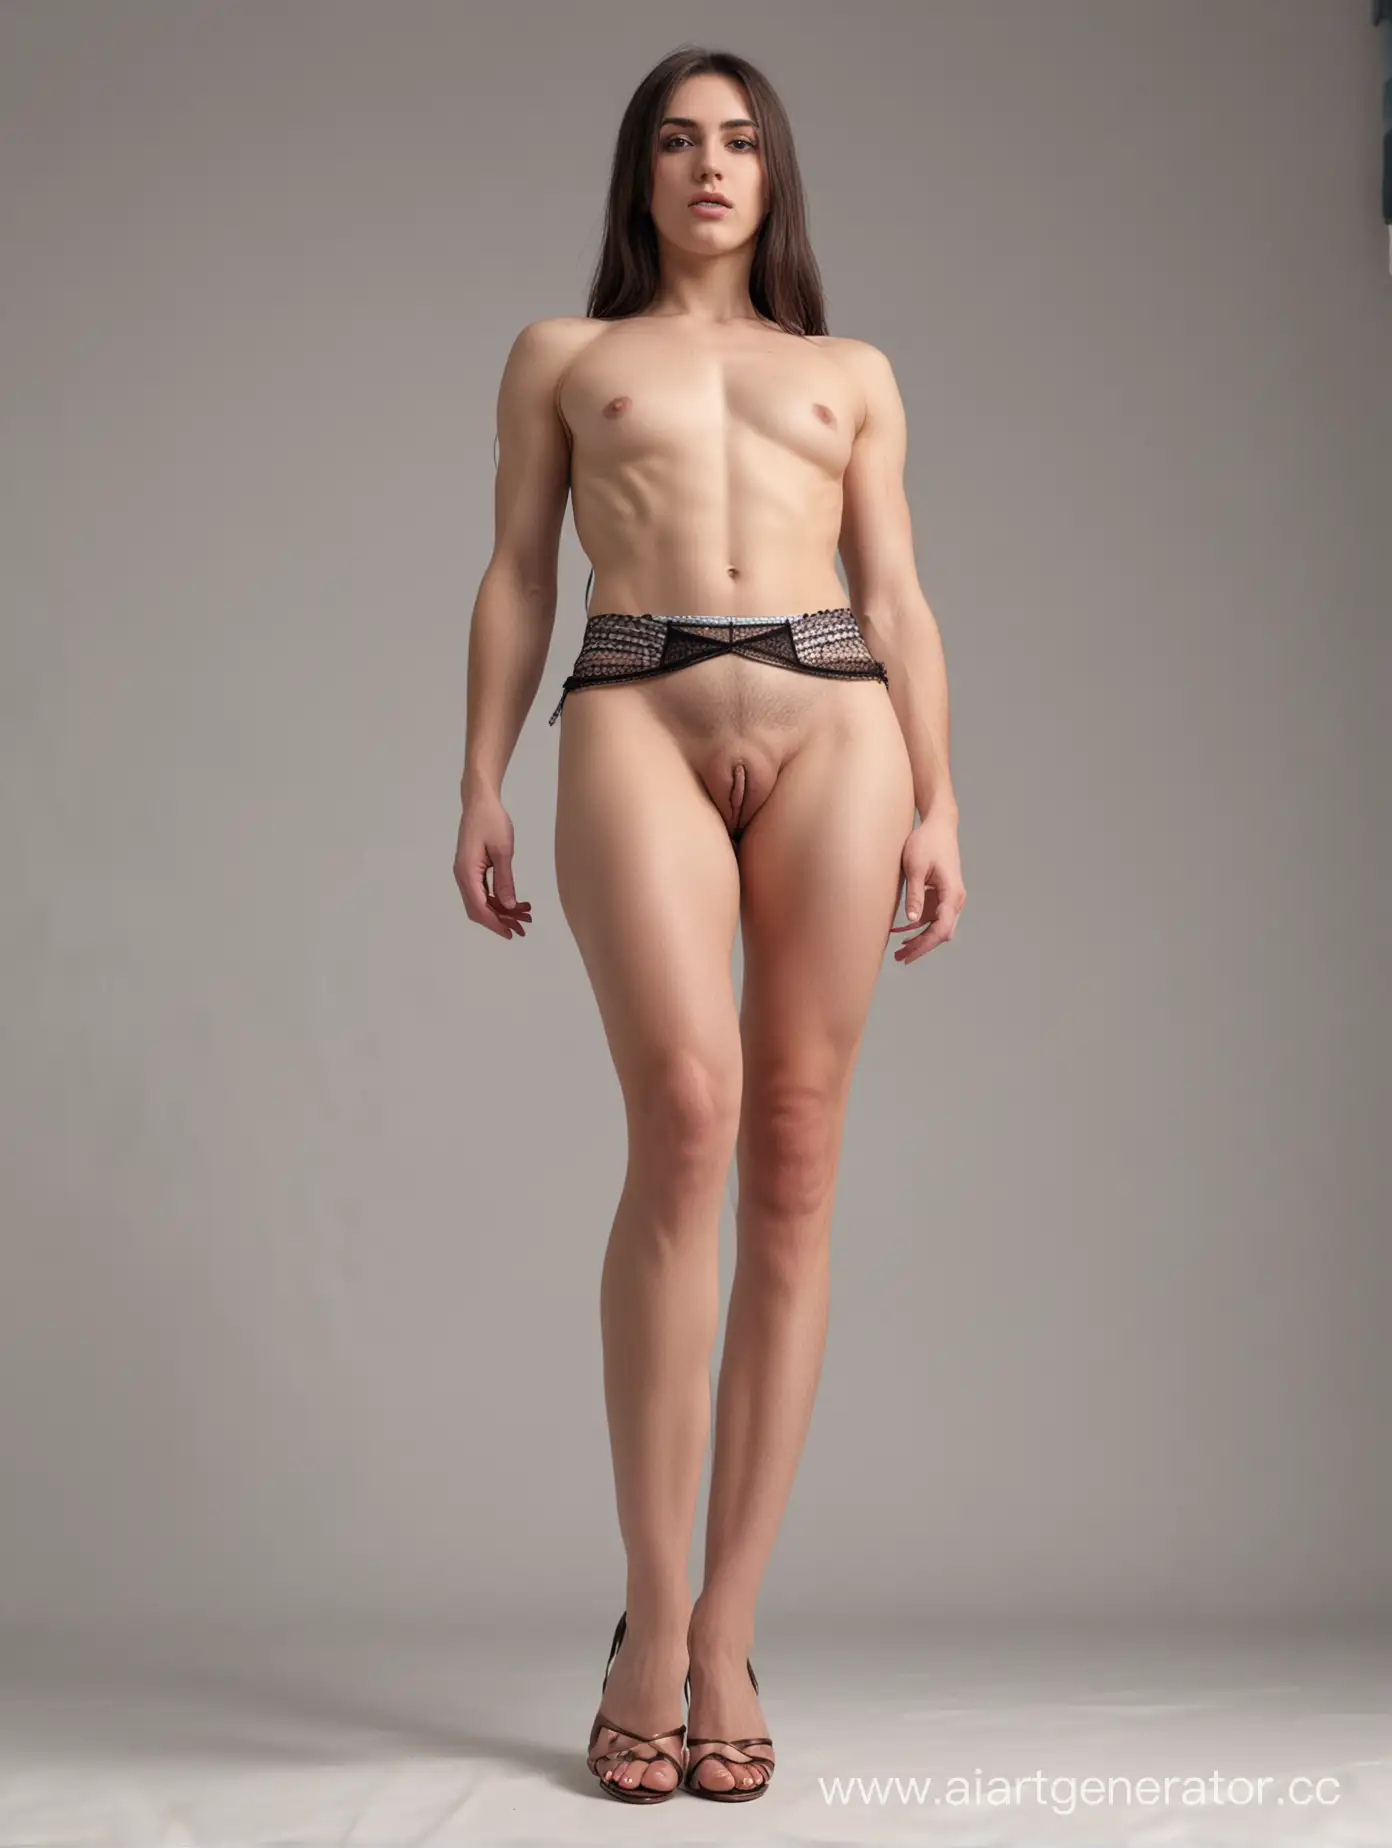 Transgender-Model-in-Skirt-Displaying-Confidence